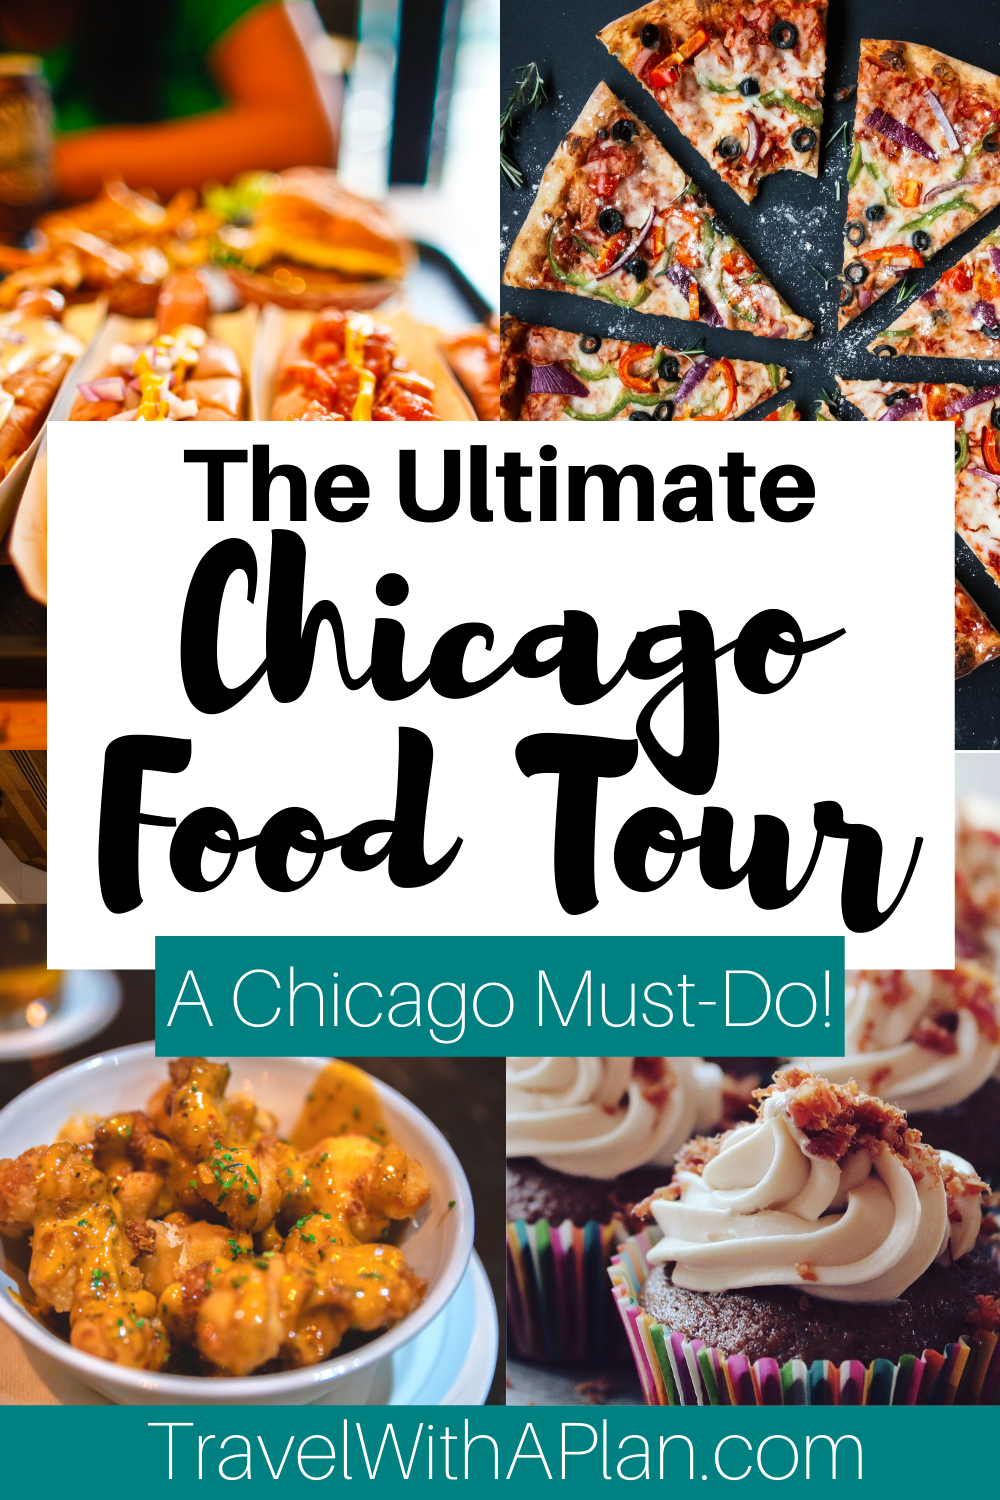 food tours around chicago